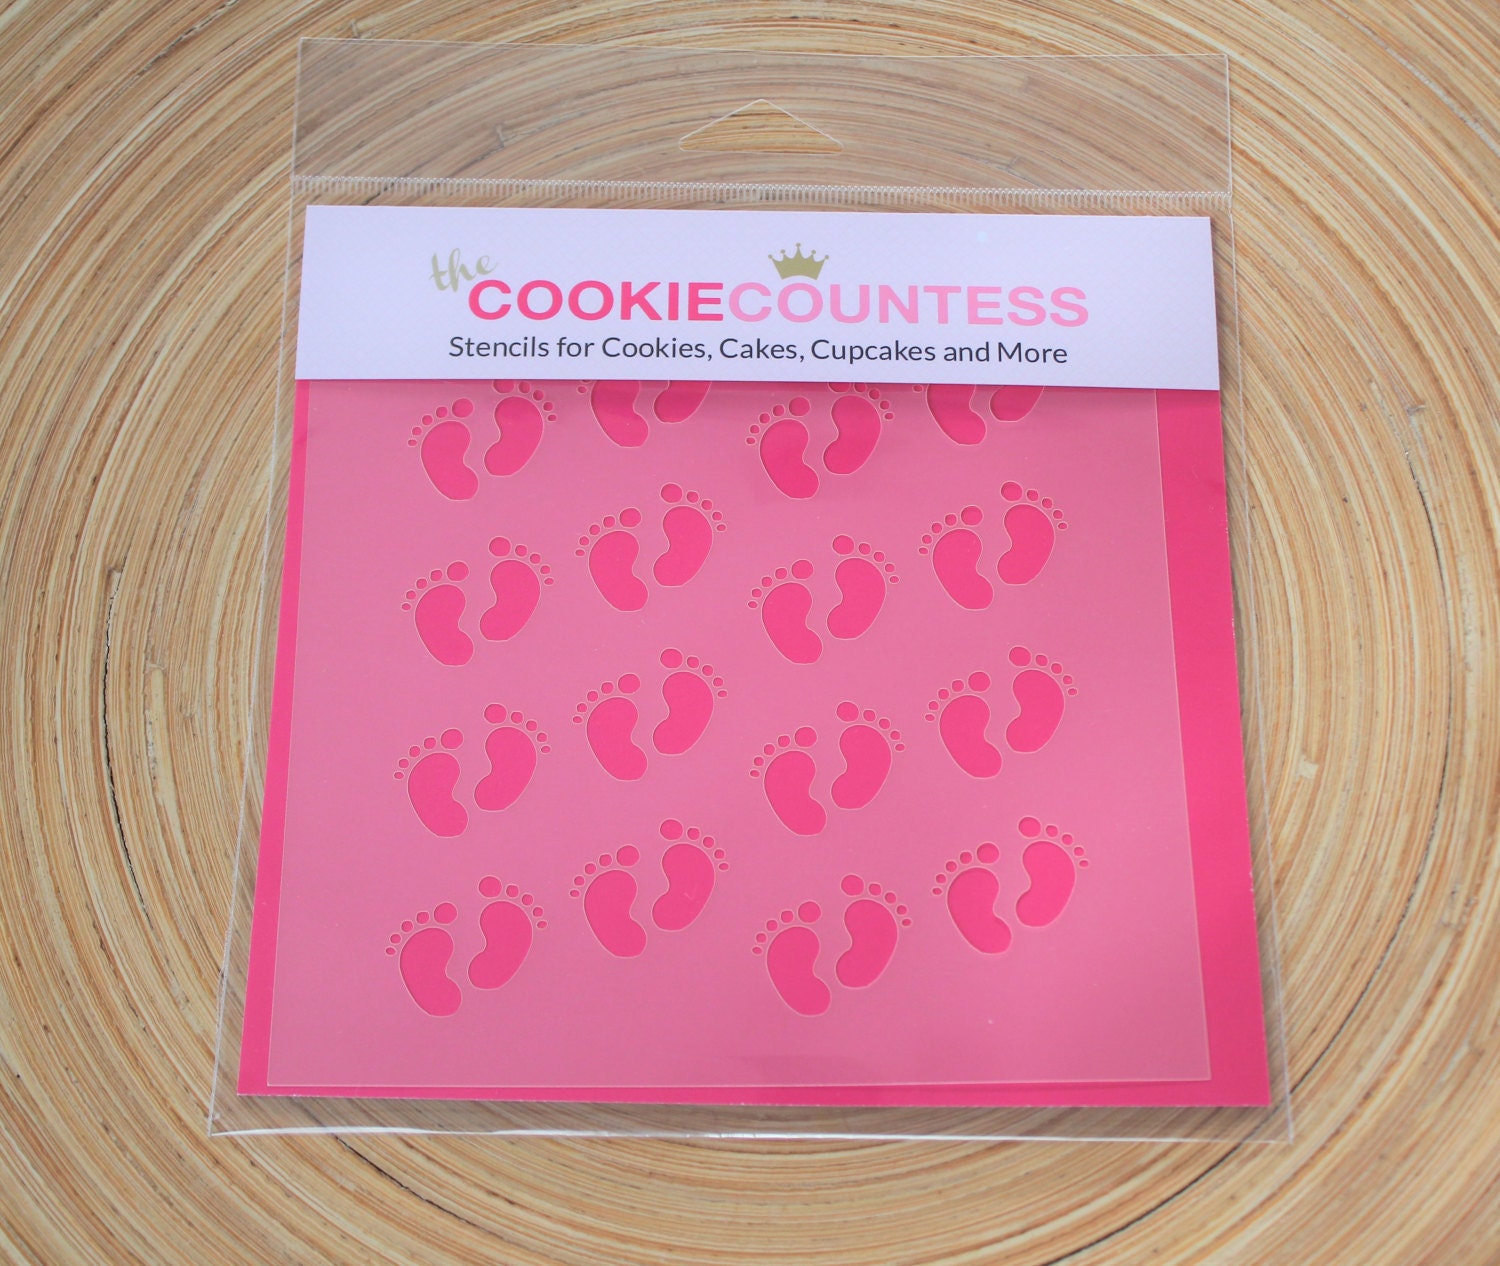 Cookie Countess - Always a Bridesmaid edible airbrush color 2oz